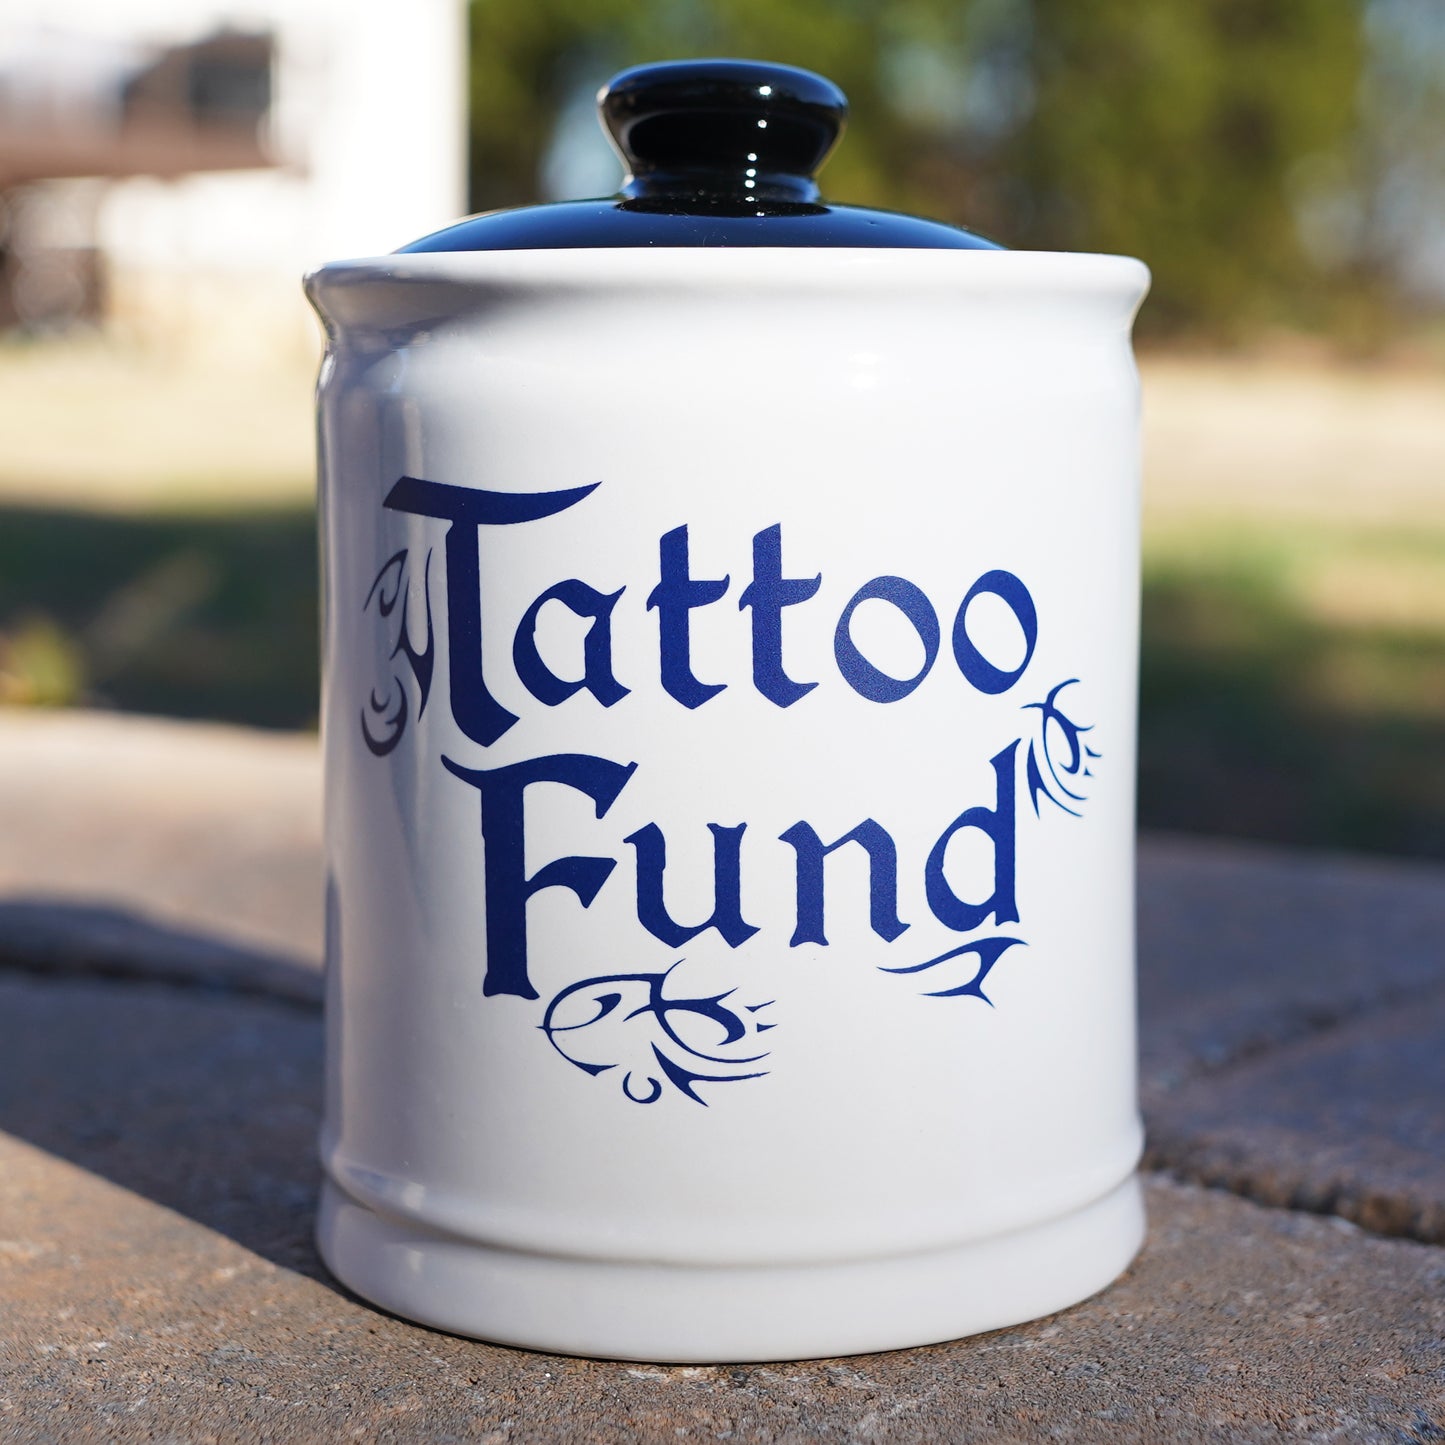 Cottage Creek Tattoo Fund Piggy Bank, Multicolored, Ceramic 6" Tattoo Jar